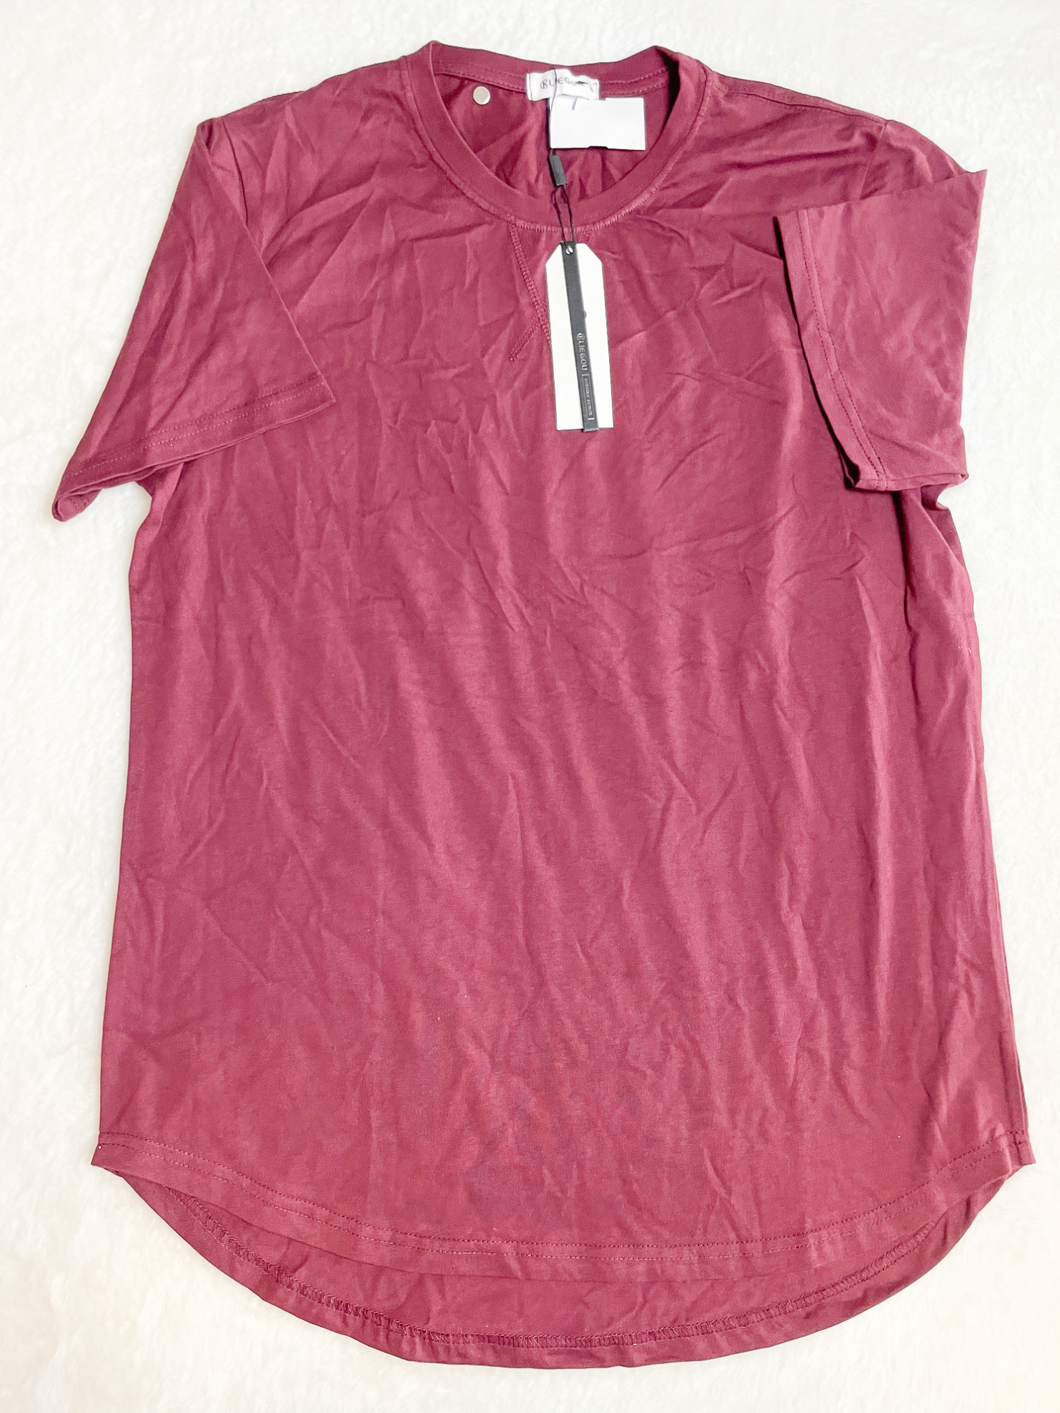 T-shirt Size Medium * - Plato's Closet Parkersburg, WV